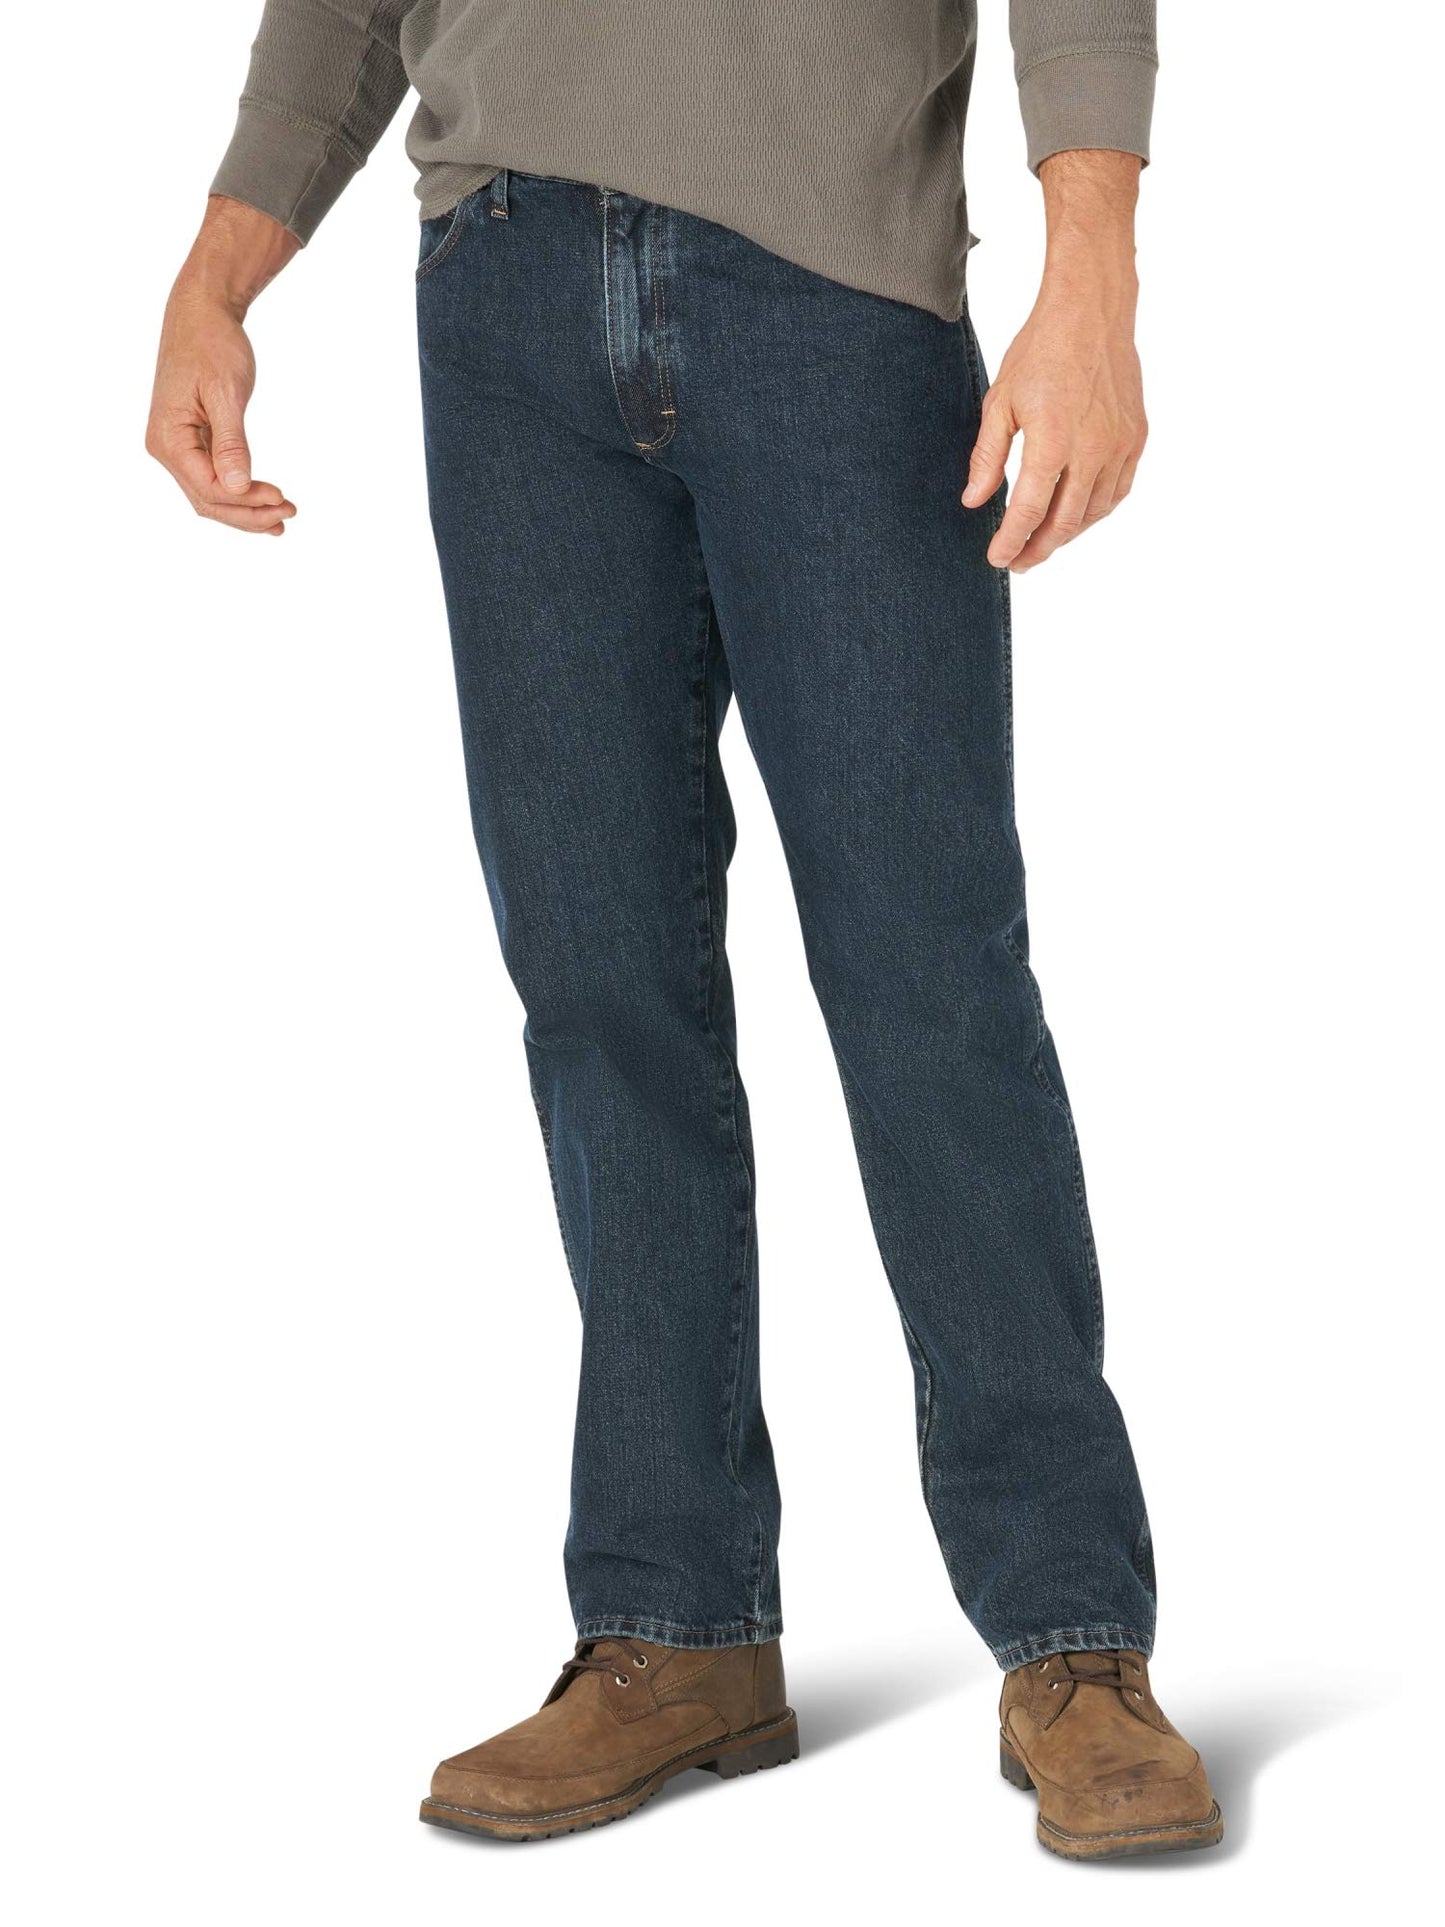 Wrangler Authentics Men's Classic 5-Pocket Regular Fit Cotton Jean, Storm, 32W x 32L